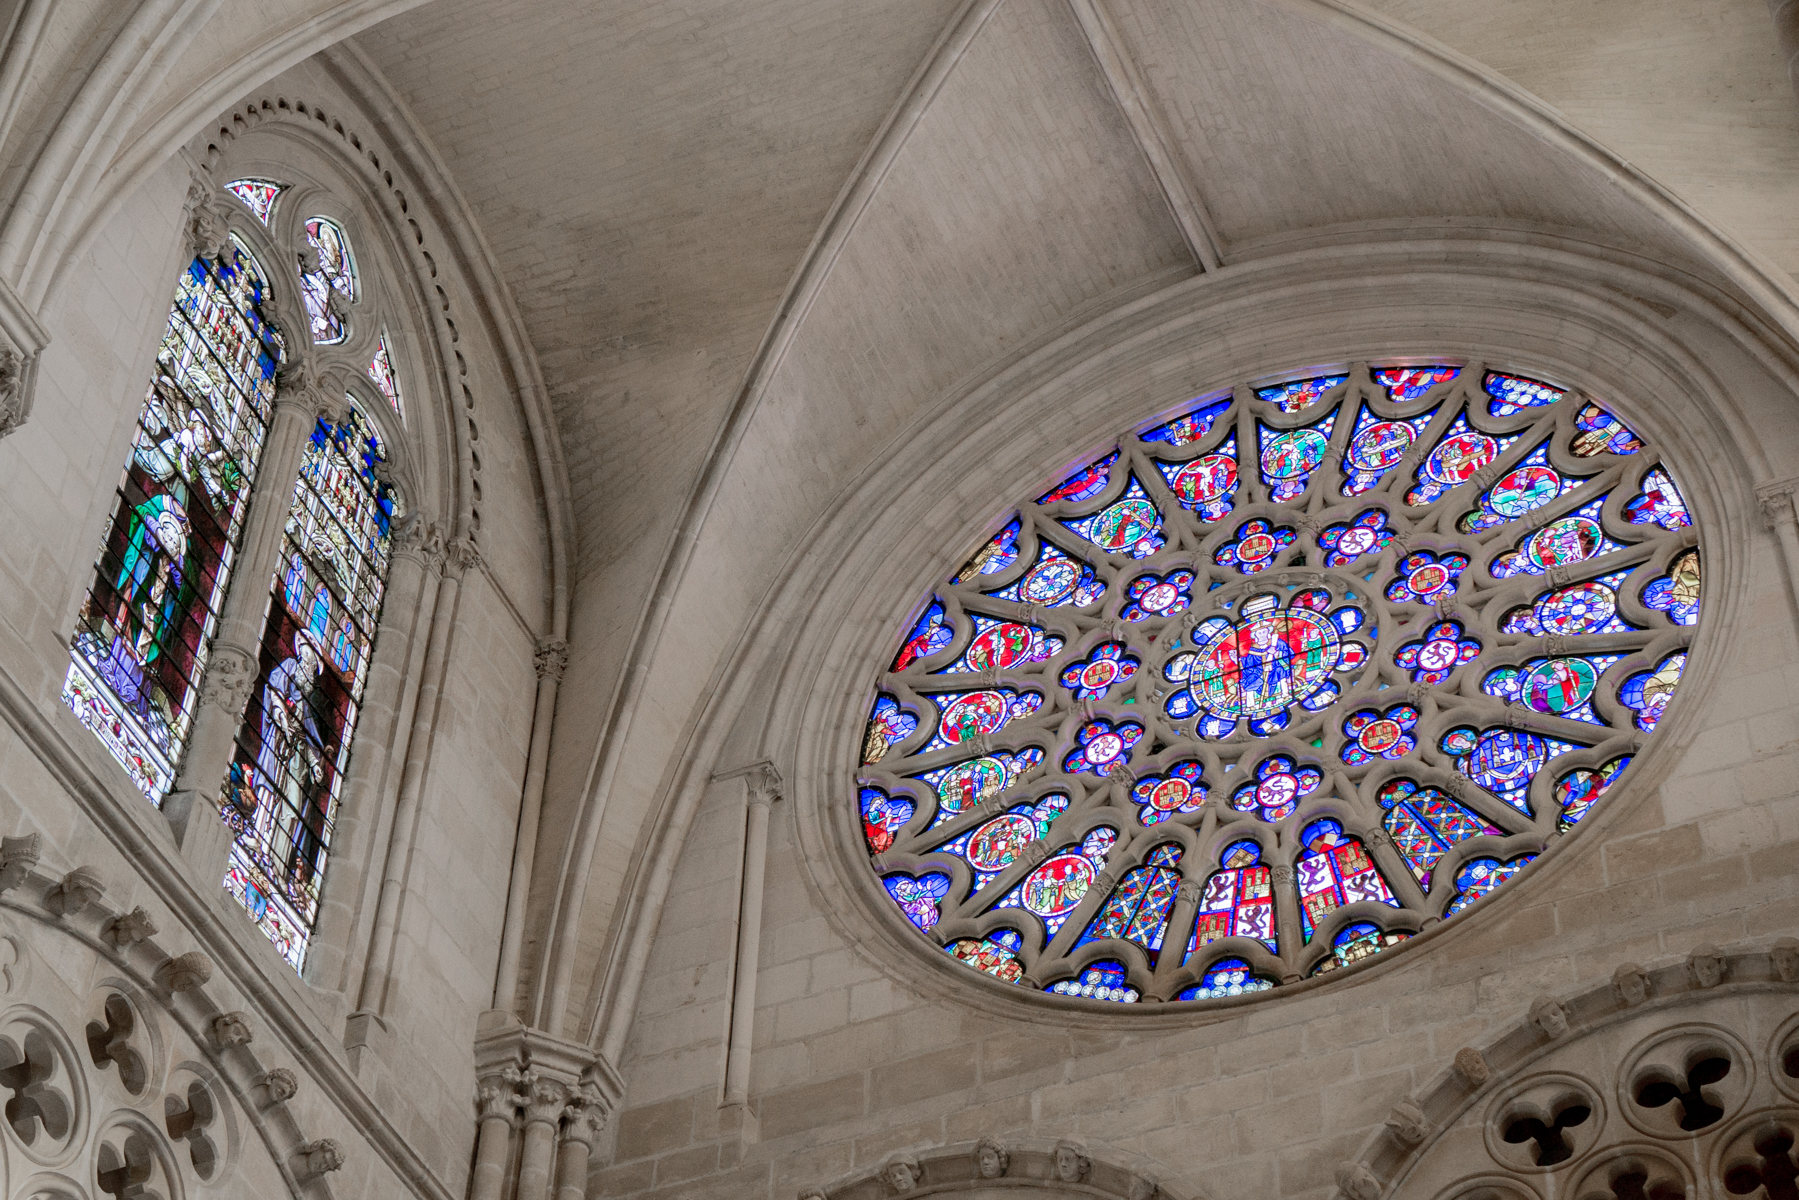 Stained glass windows in the south transept of Catedral de Santa Mara de Burgos, Burgos, Spain | Photo by Mike Hudak